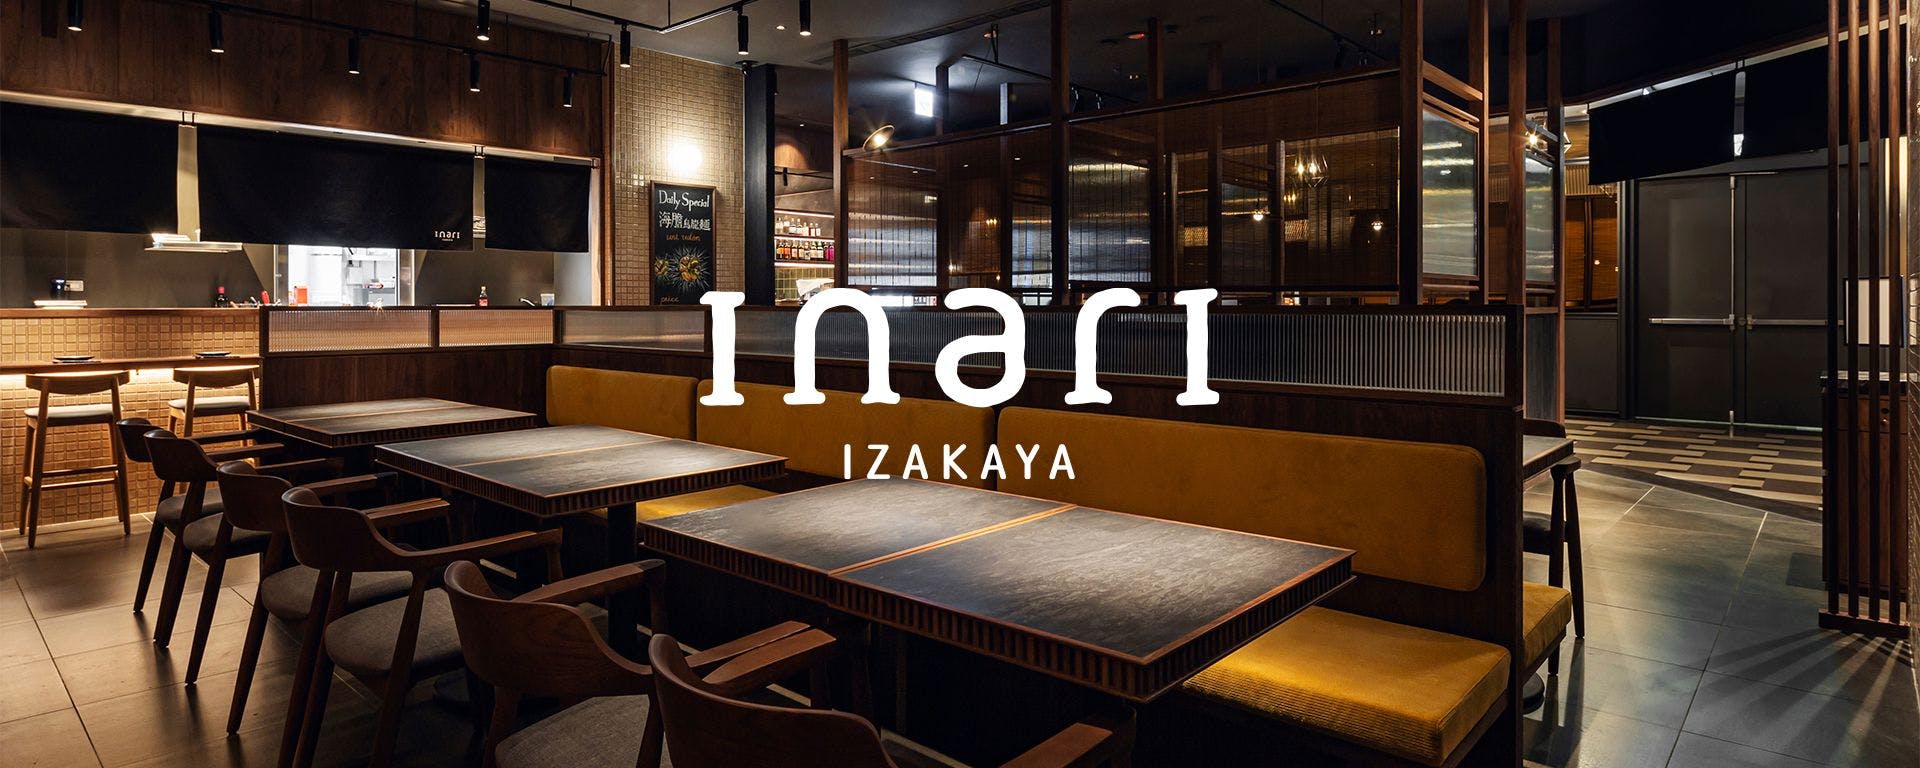 inari Izakaya 線上訂候位服務